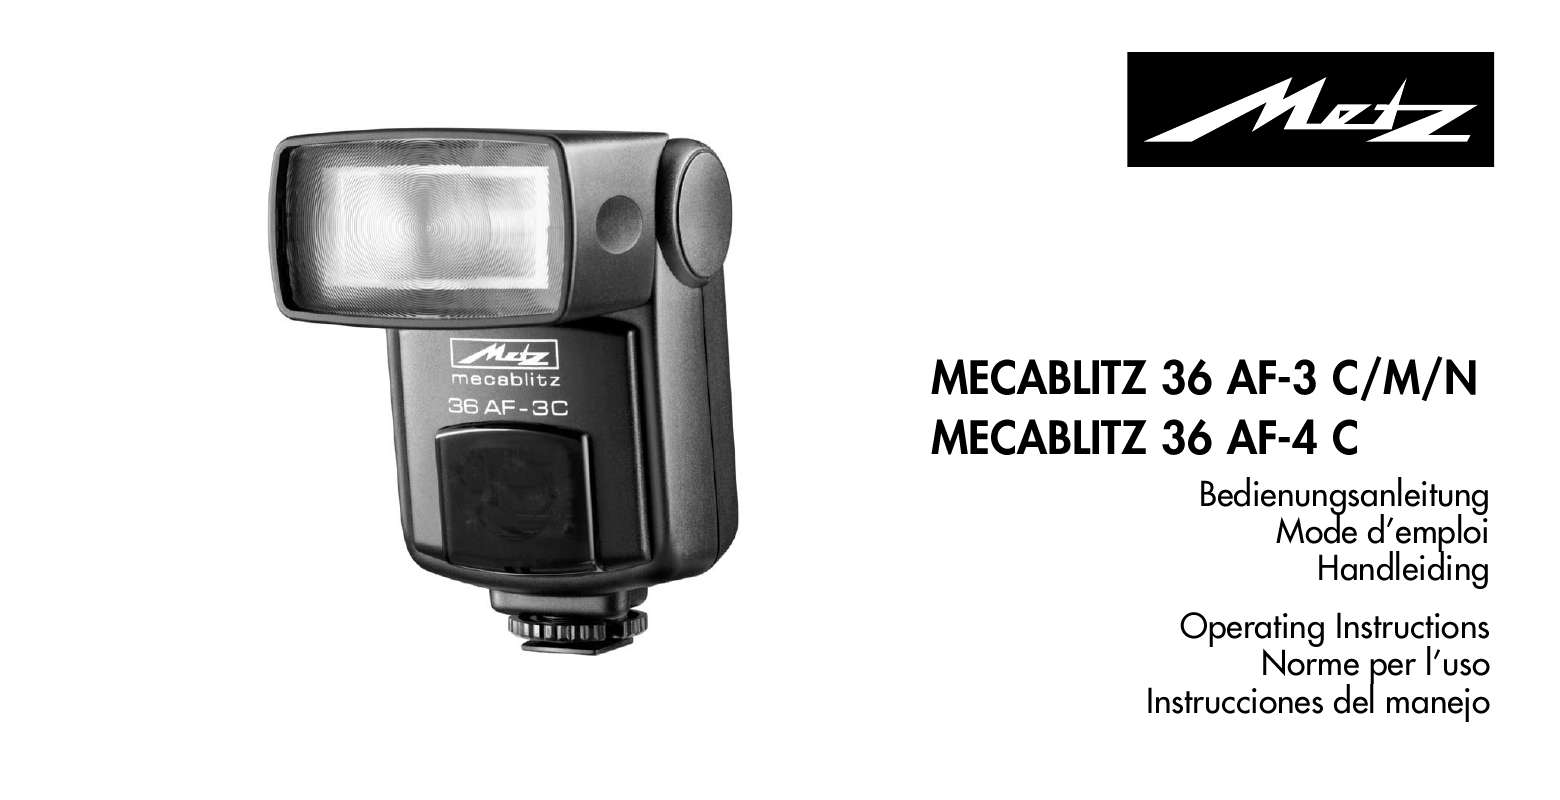 Guide utilisation  METZ MECABLITZ 36 AF-3 M  de la marque METZ